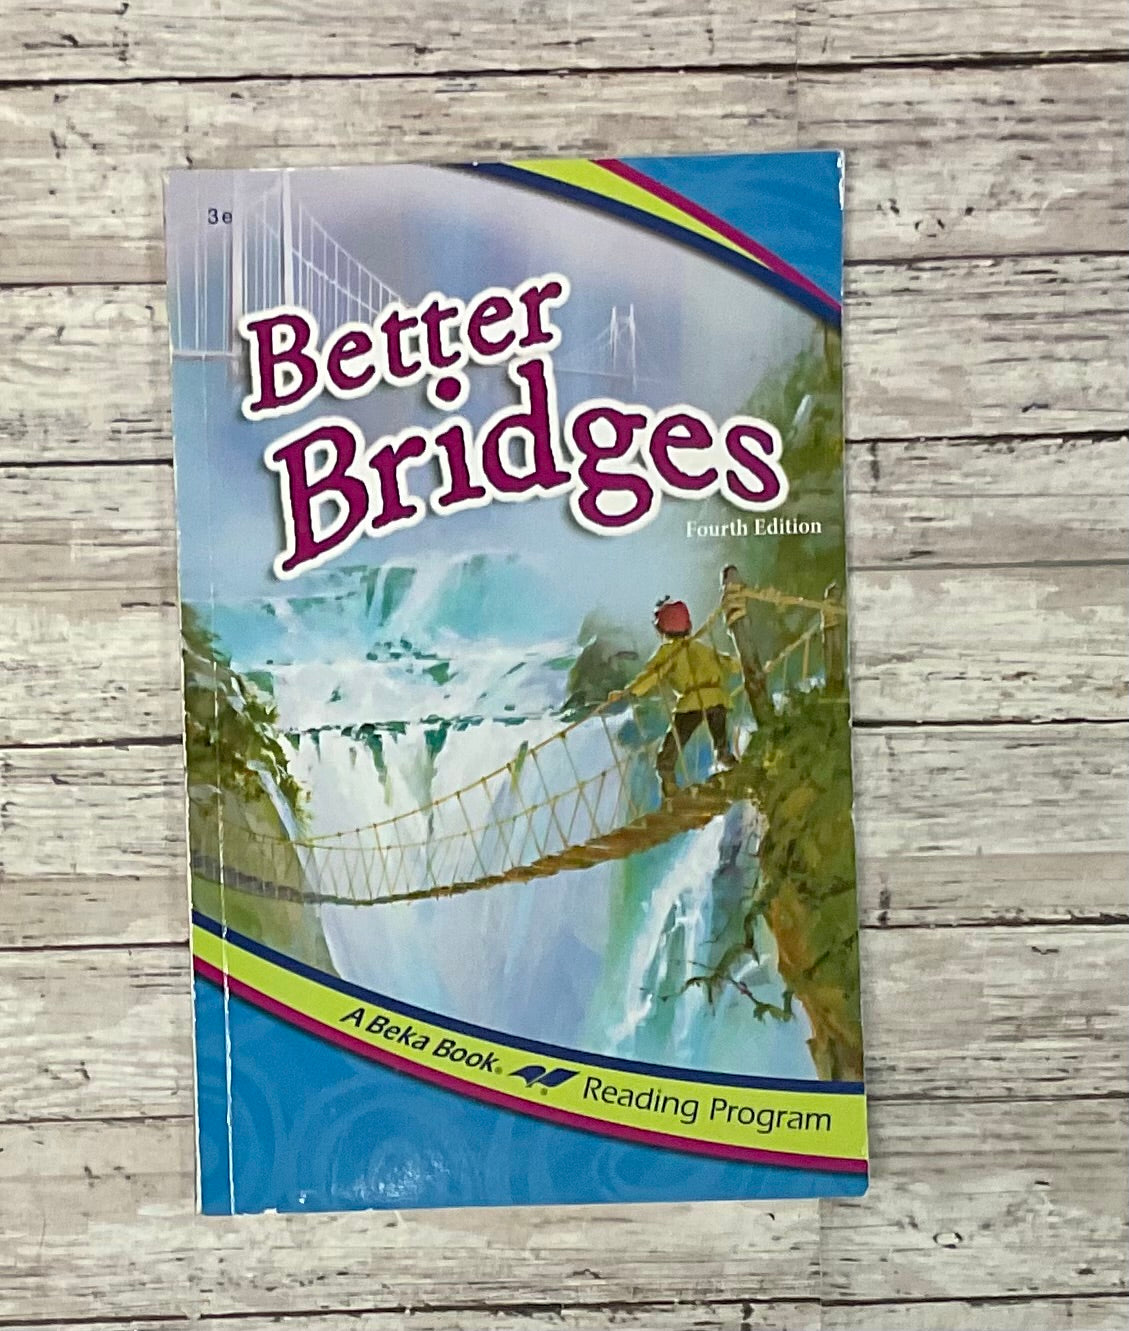 Better Bridges